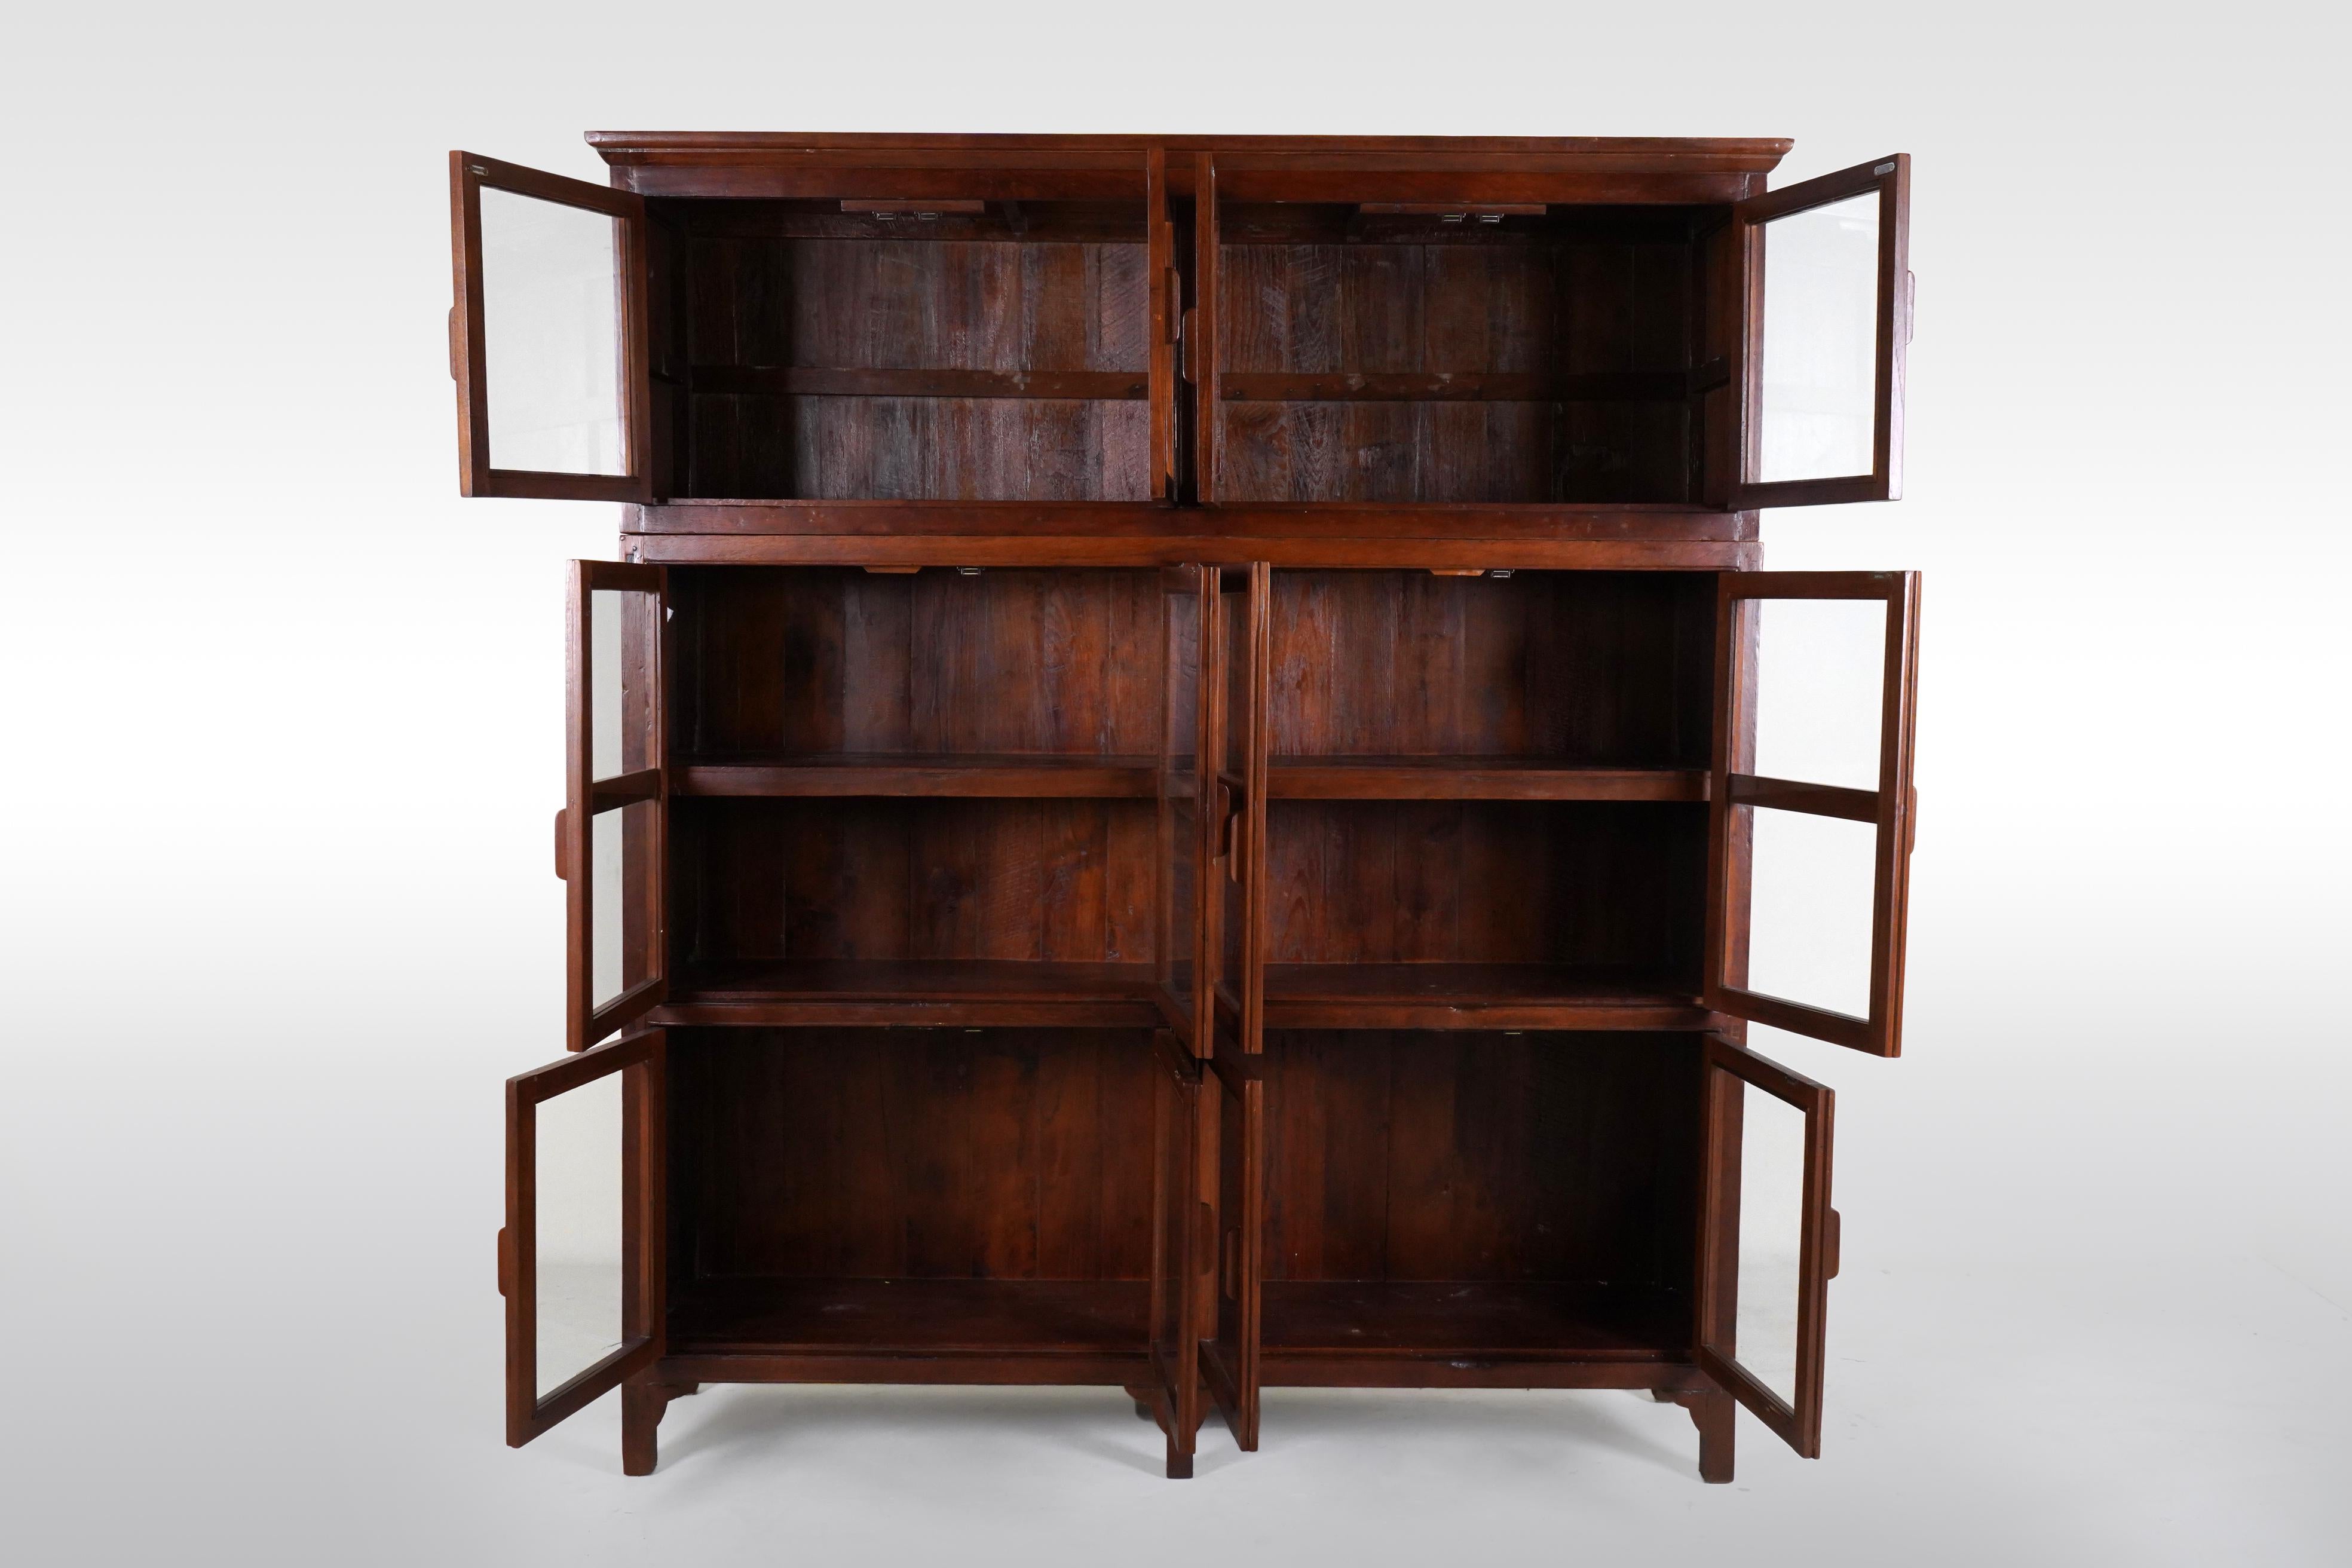 A British Colonial Teak Wood Bookcase 1